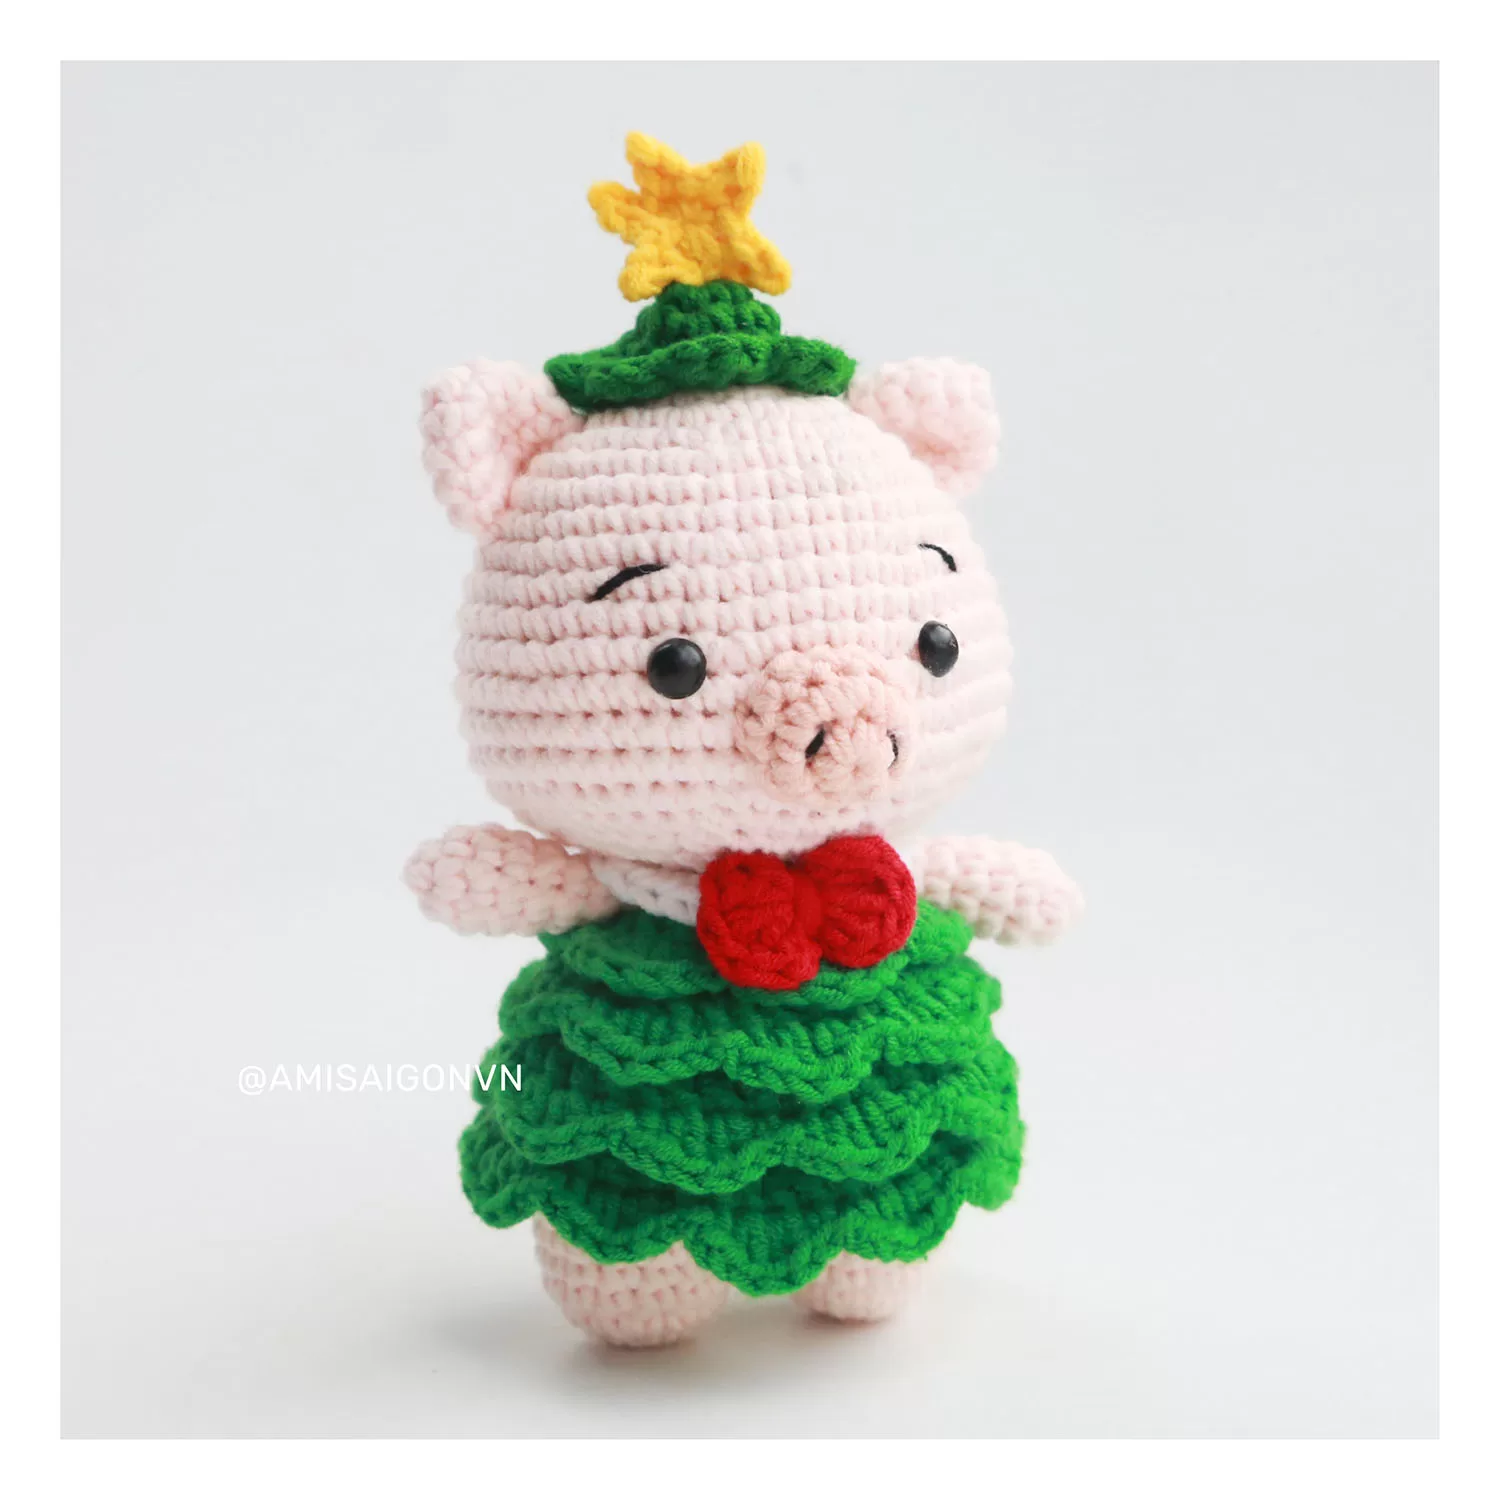 Pig in Christmas Tree Outfit Amigurumi | Crochet Pattern | Amigurumi Tutorial PDF in English | AmiSaigon